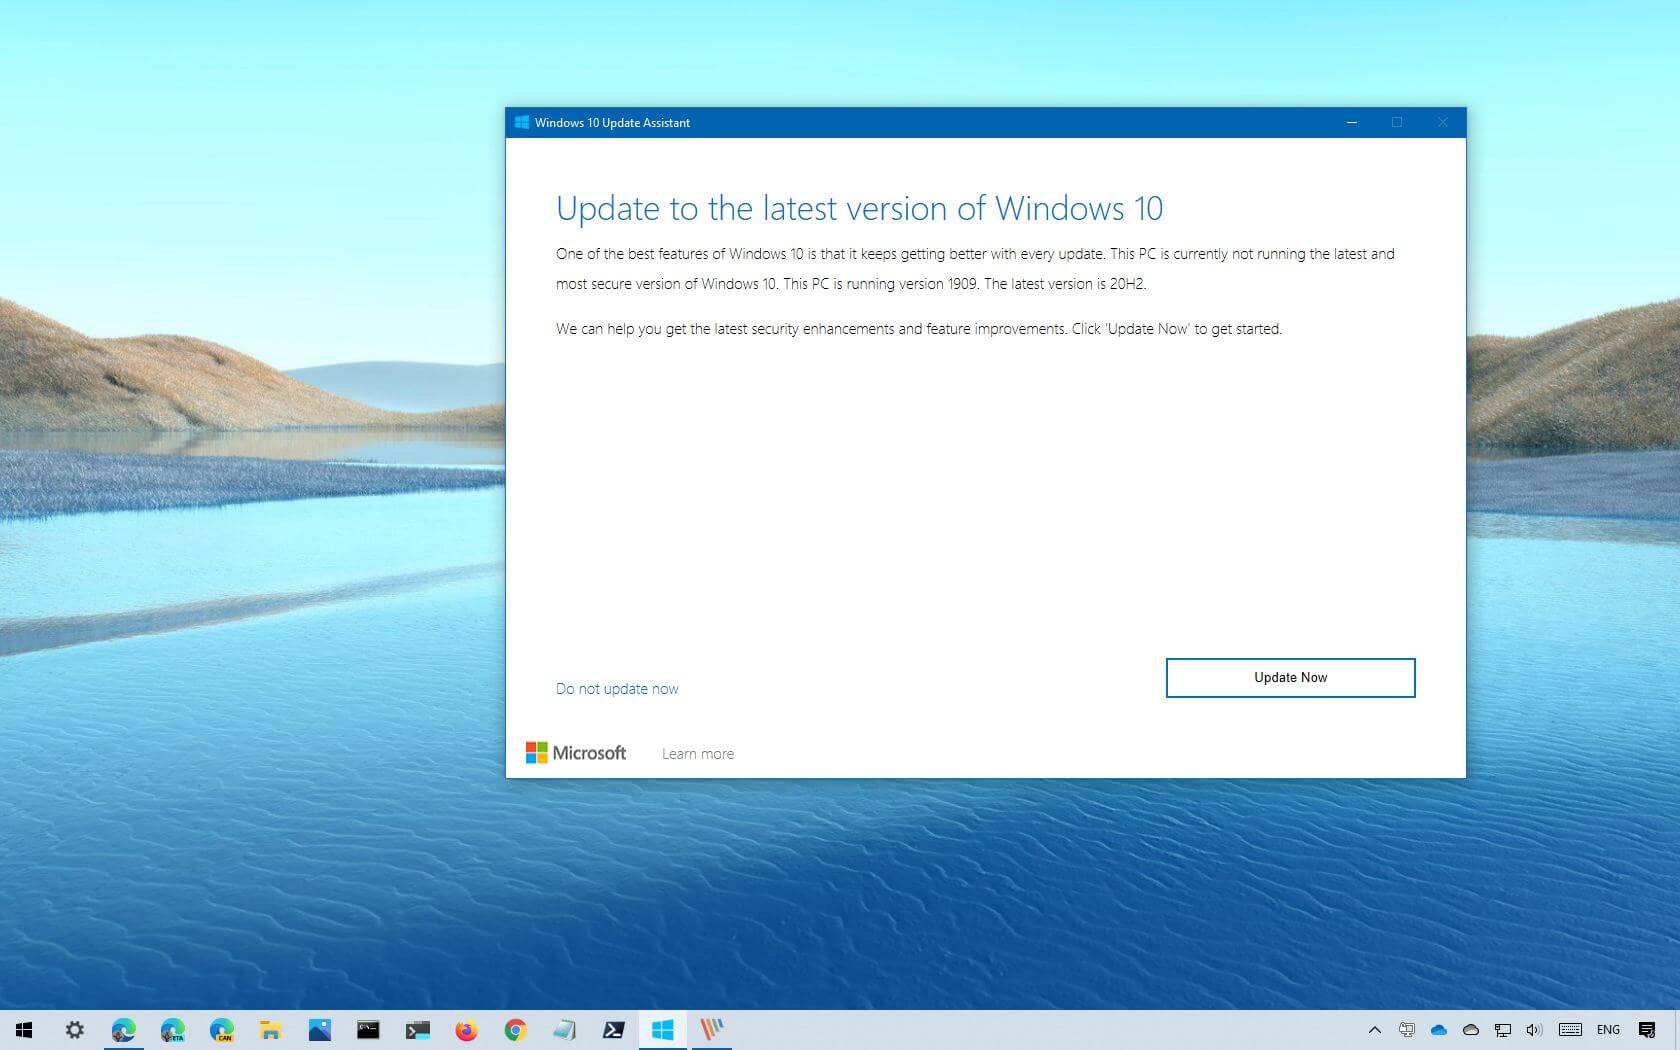 Windows 10 21H1 Update Assistant